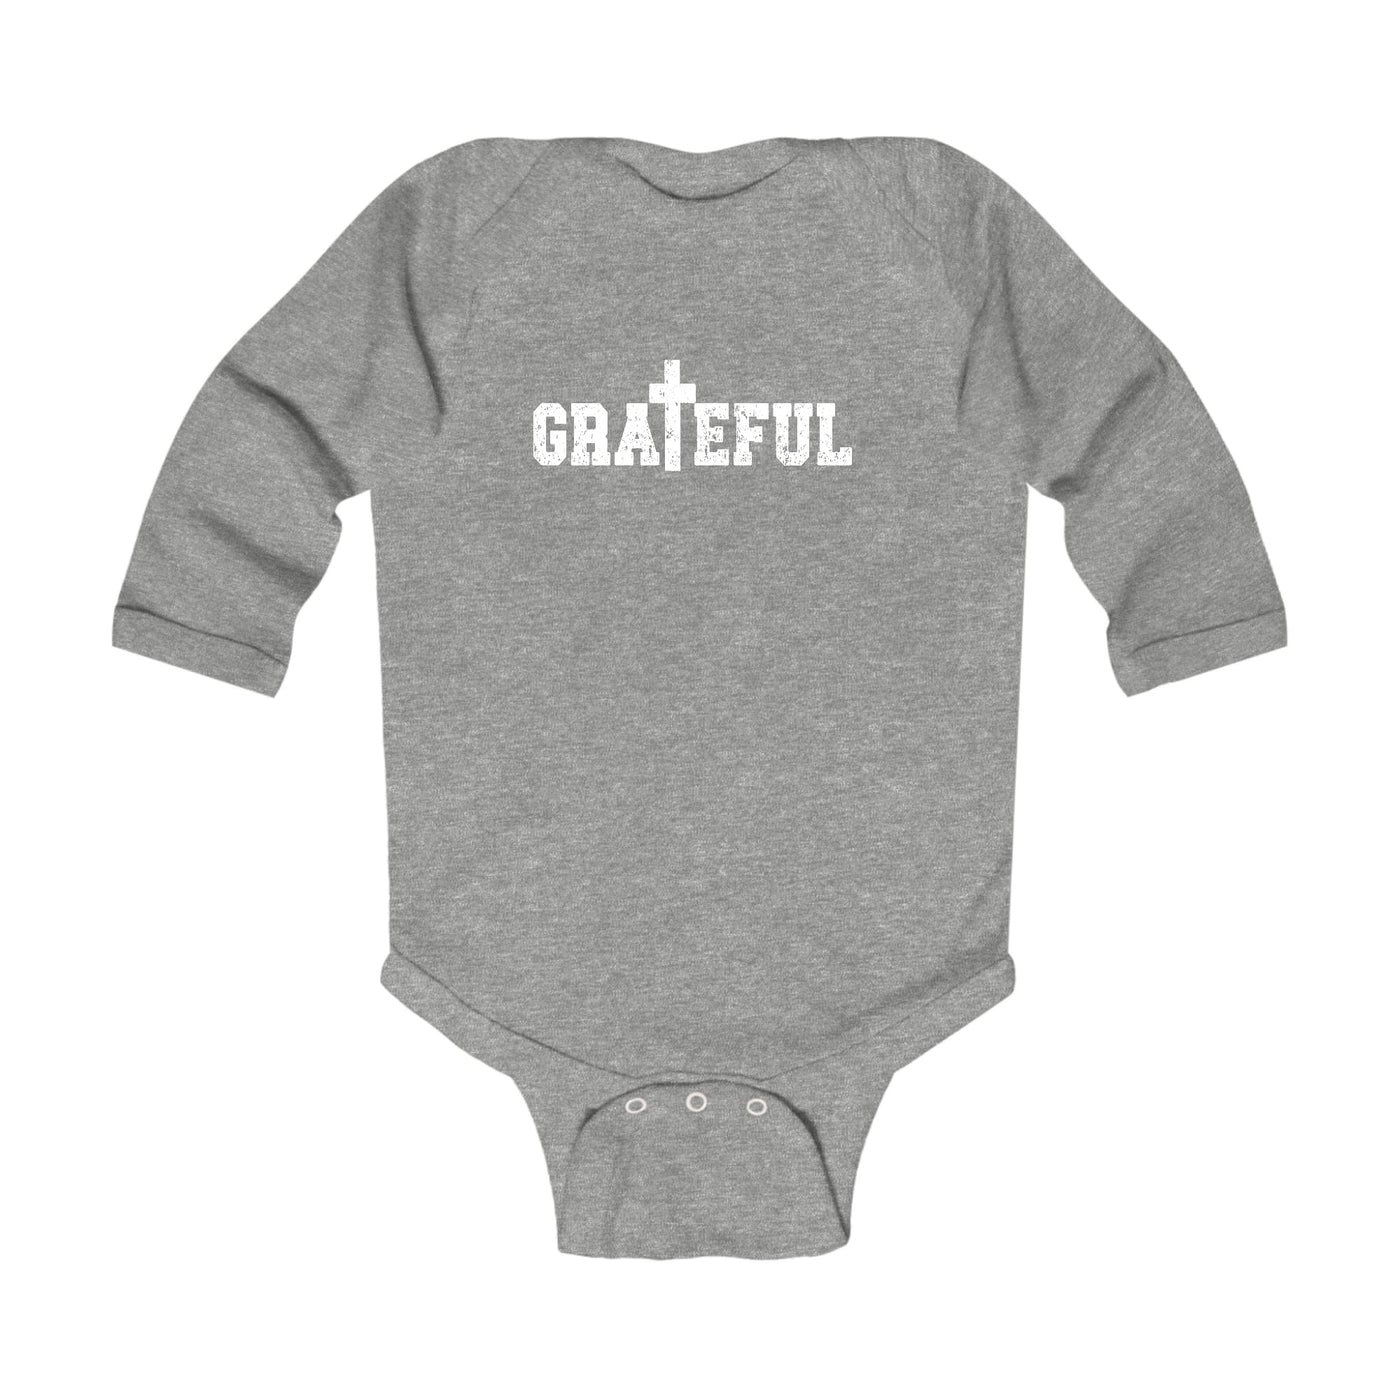 Infant Long Sleeve Graphic T-shirt Grateful Print - Childrens | Infant